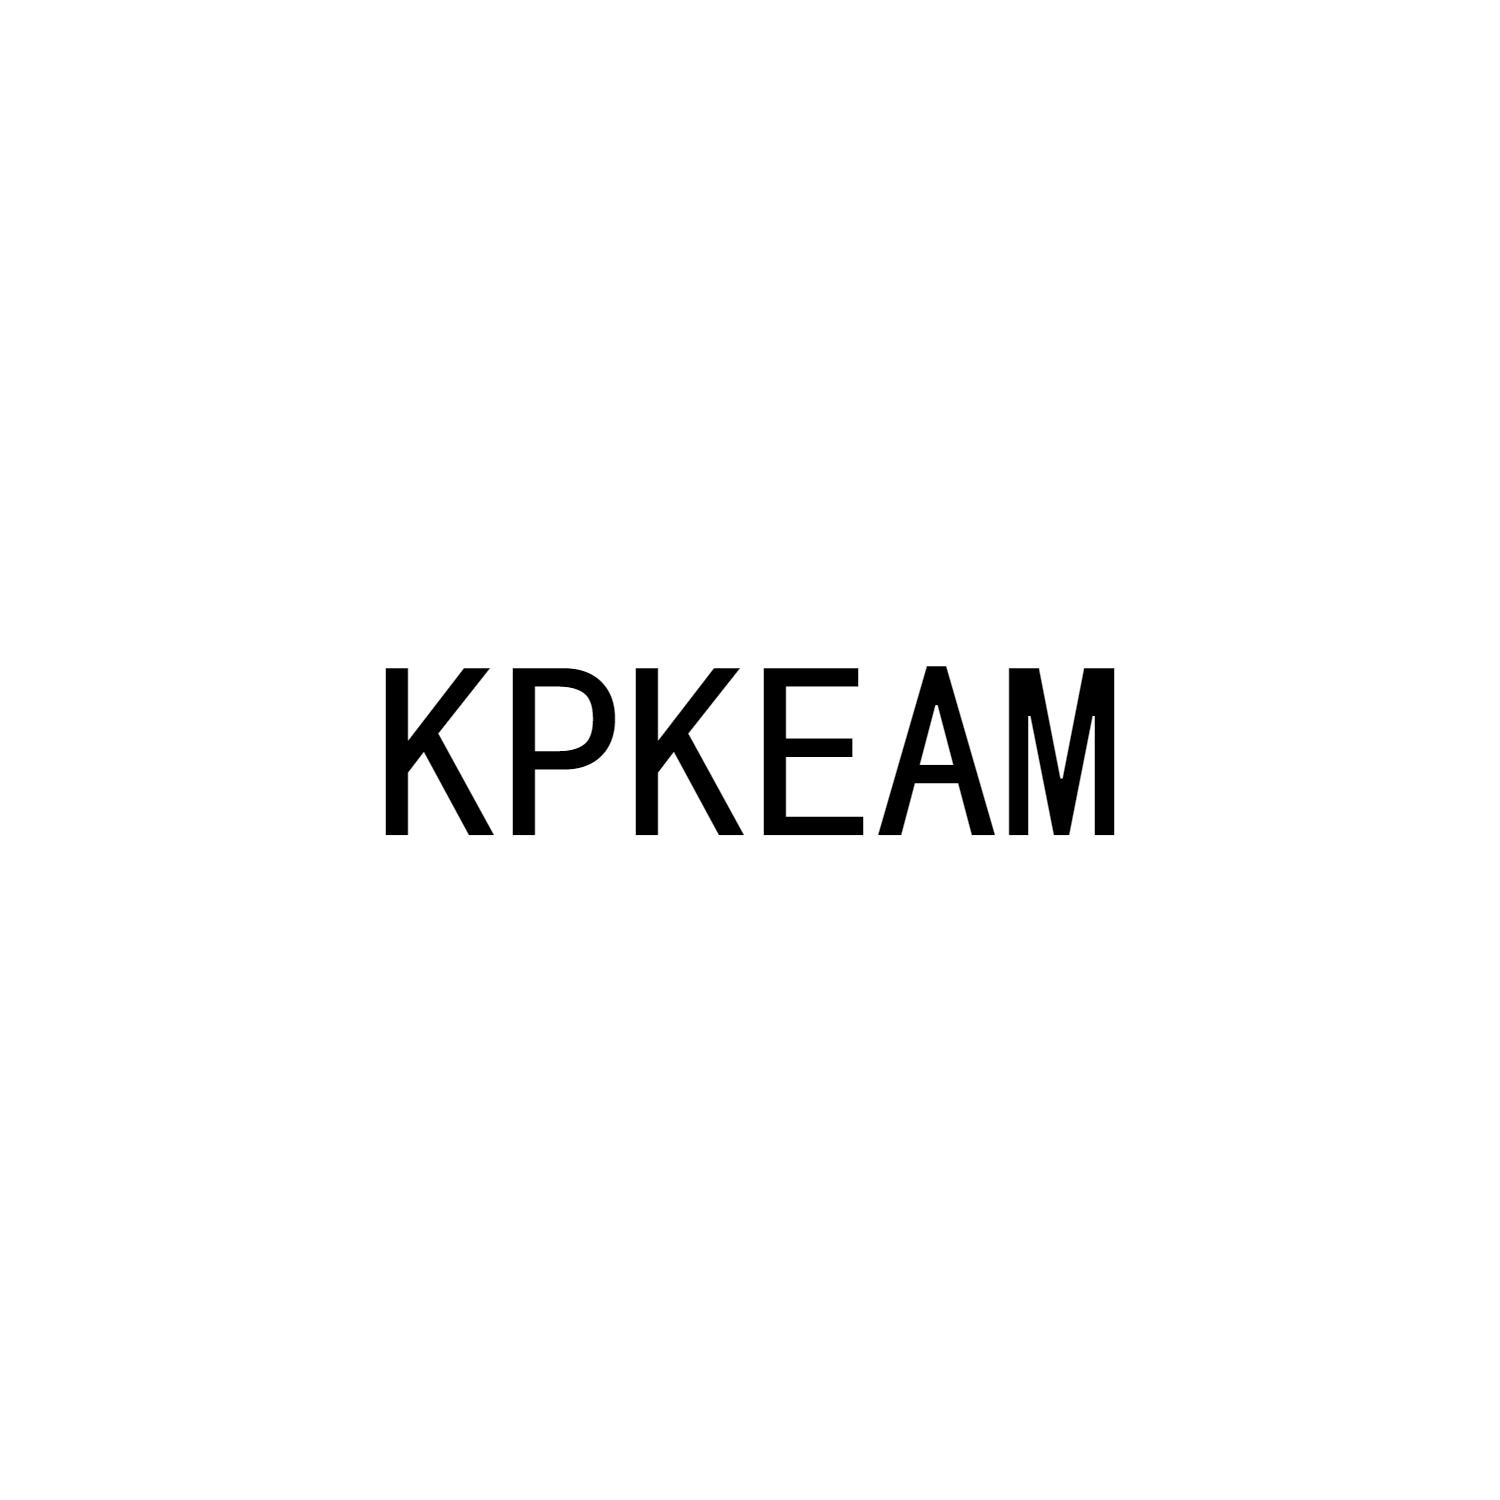 KPKEAM